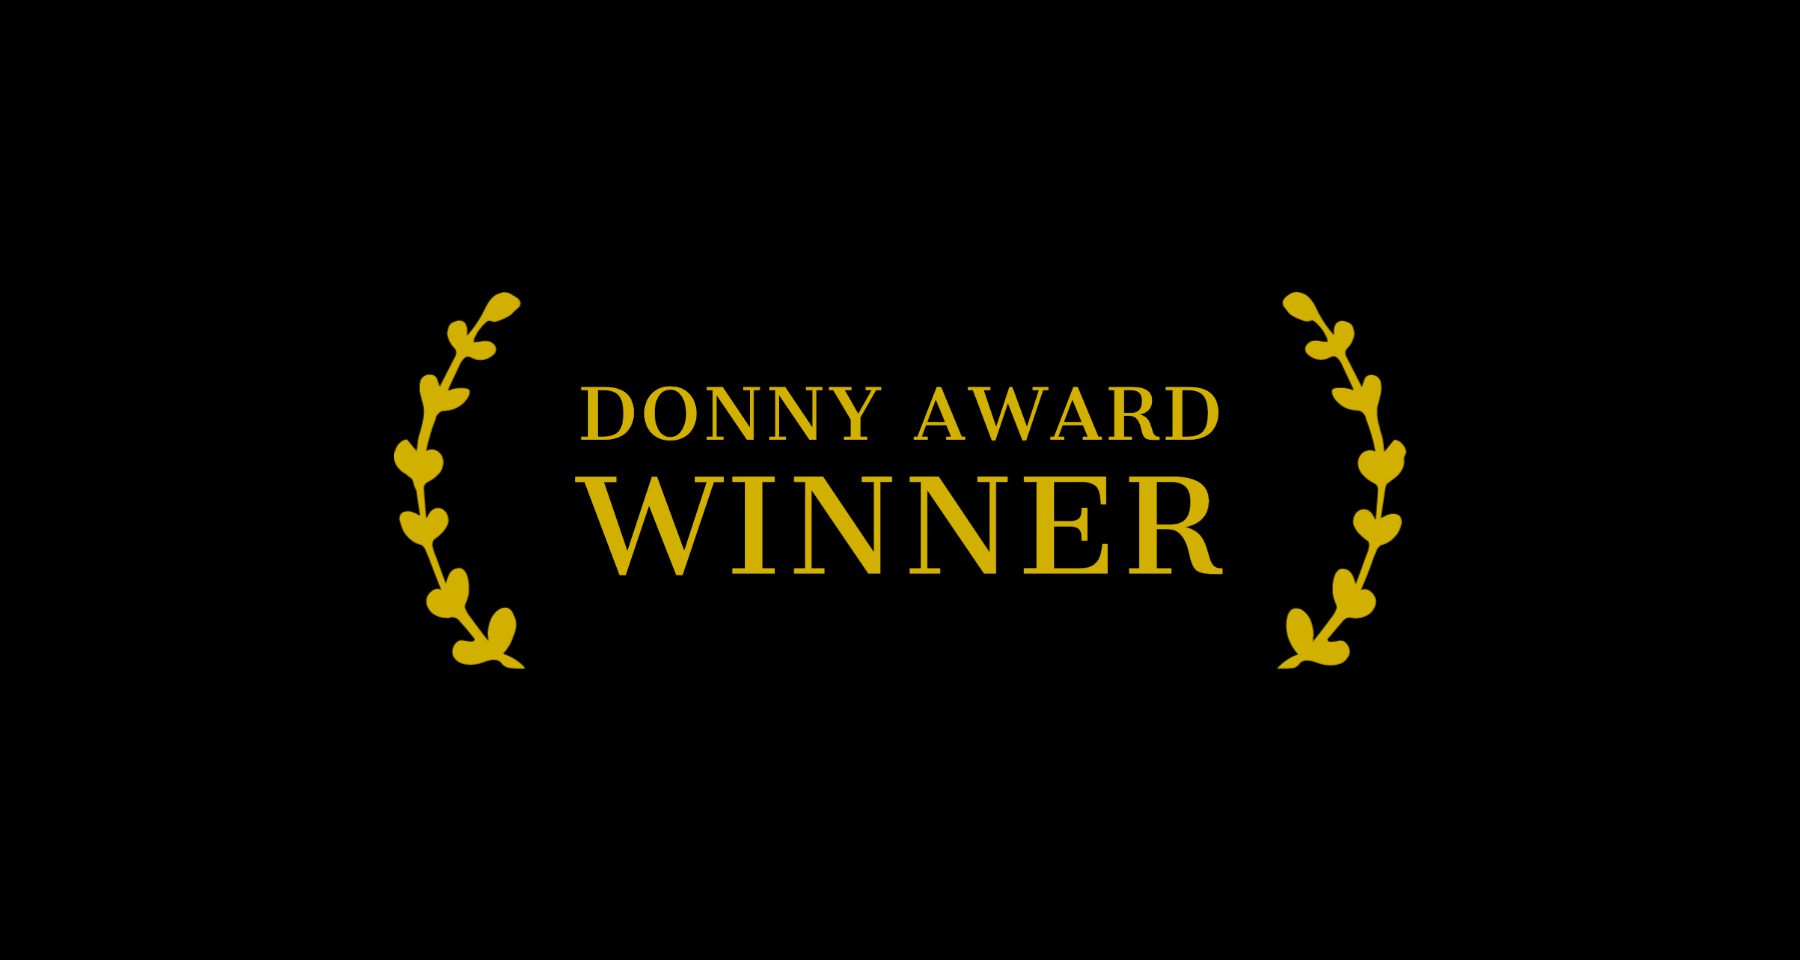 Donny Award Winner laurel